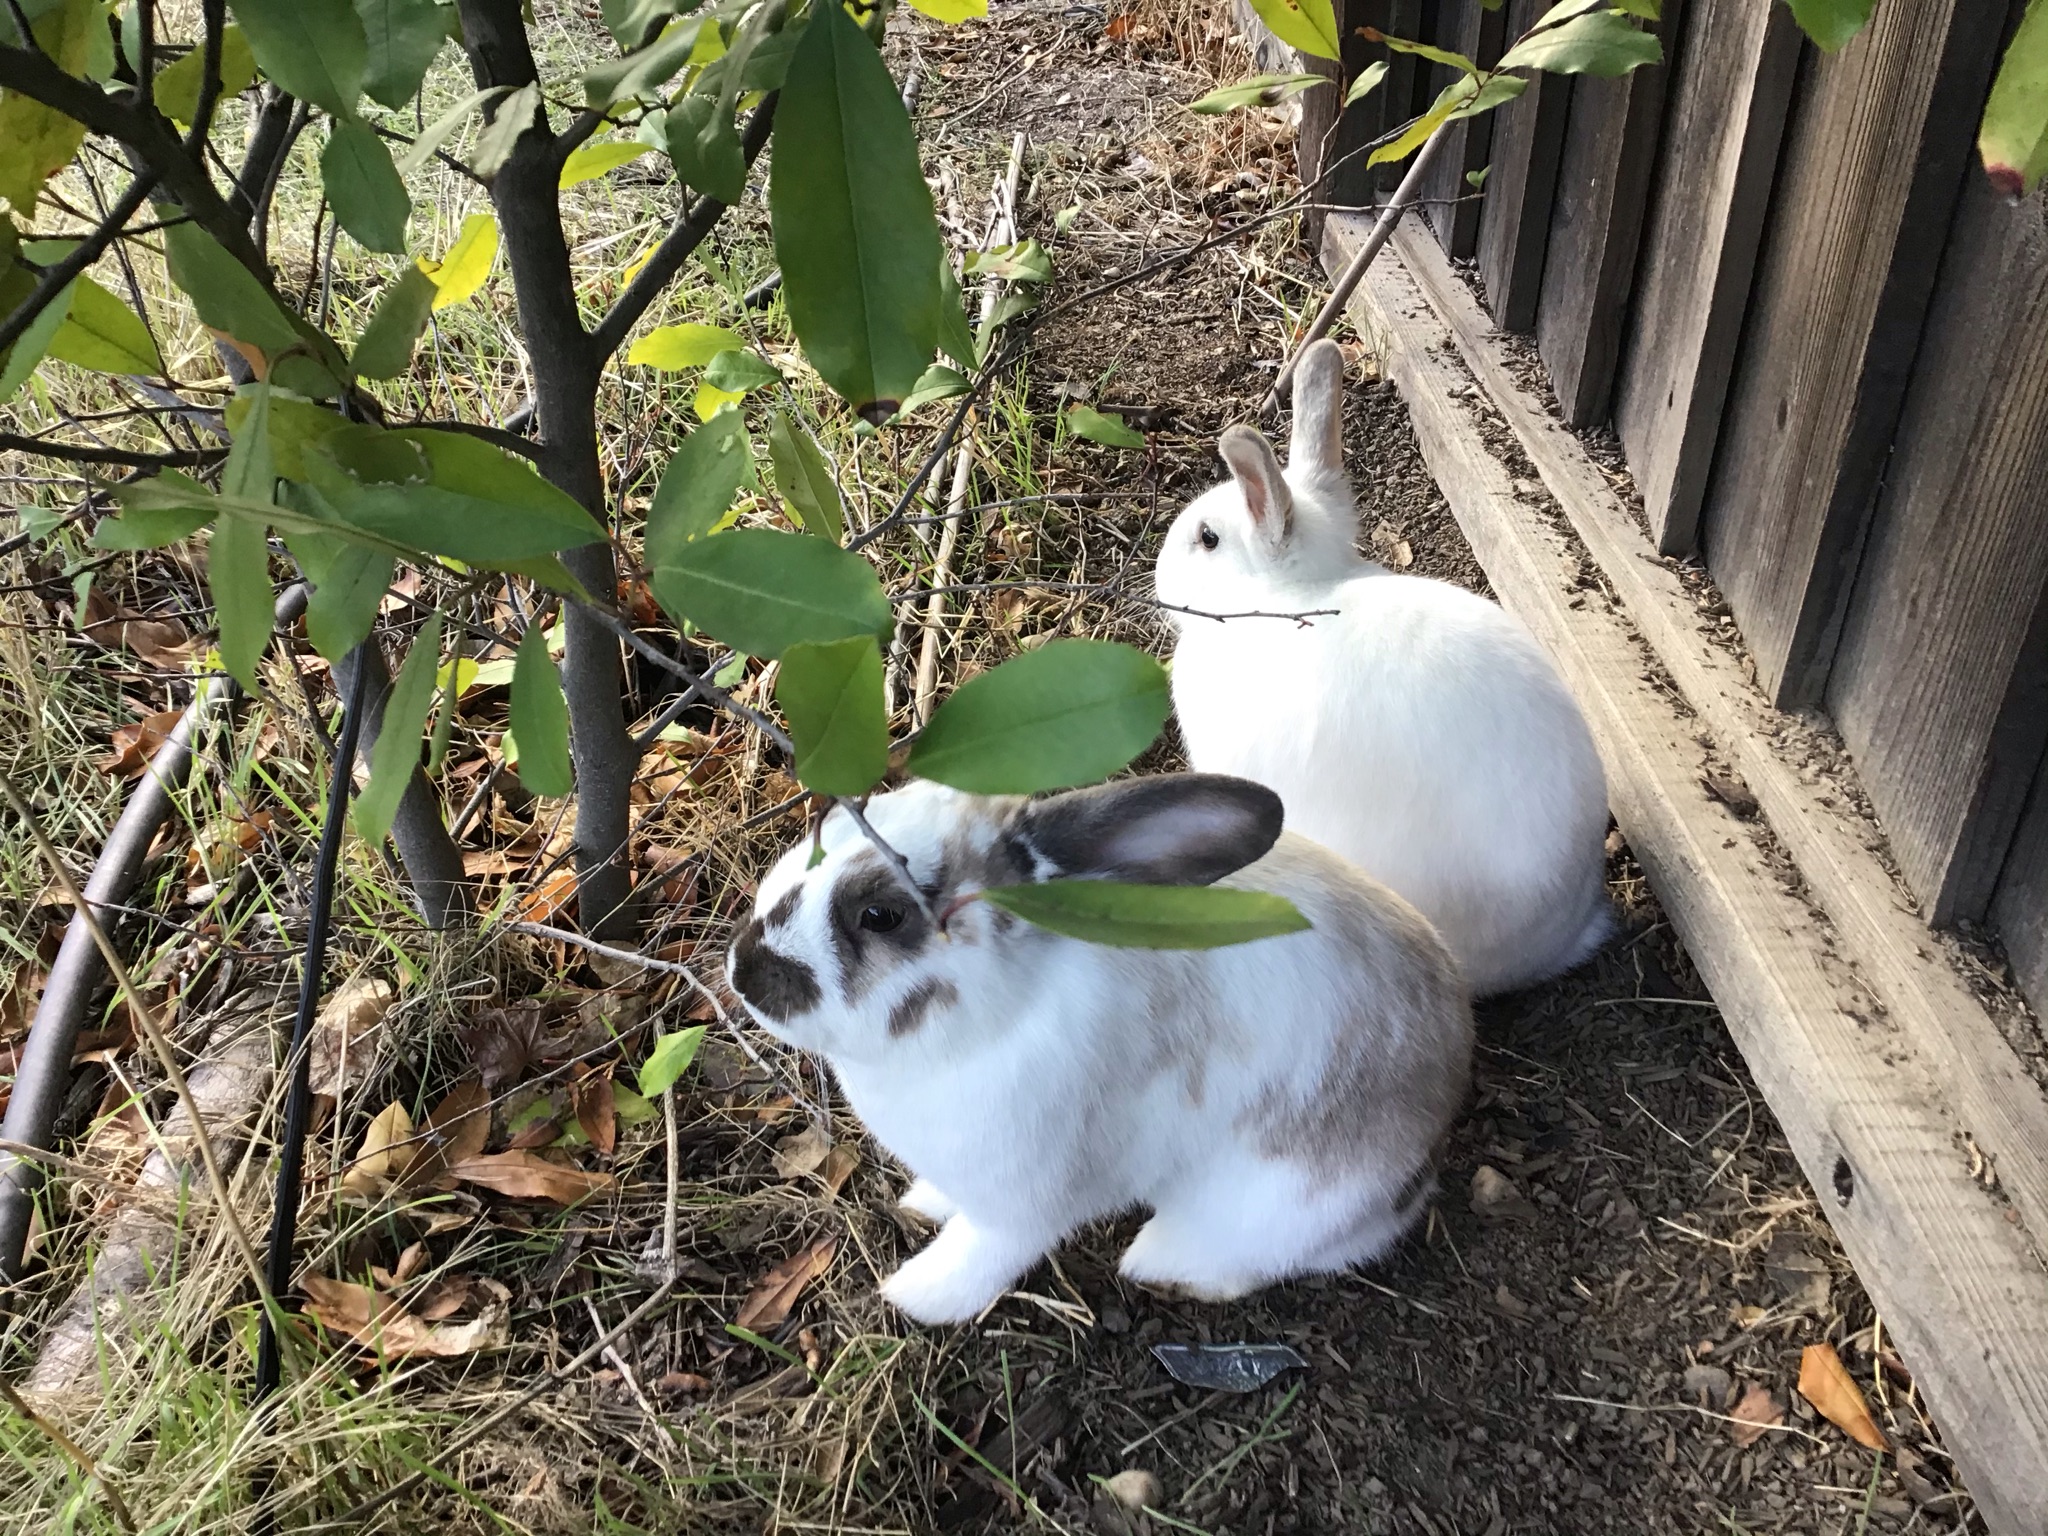 My 2 bunnies chilling in my backyard